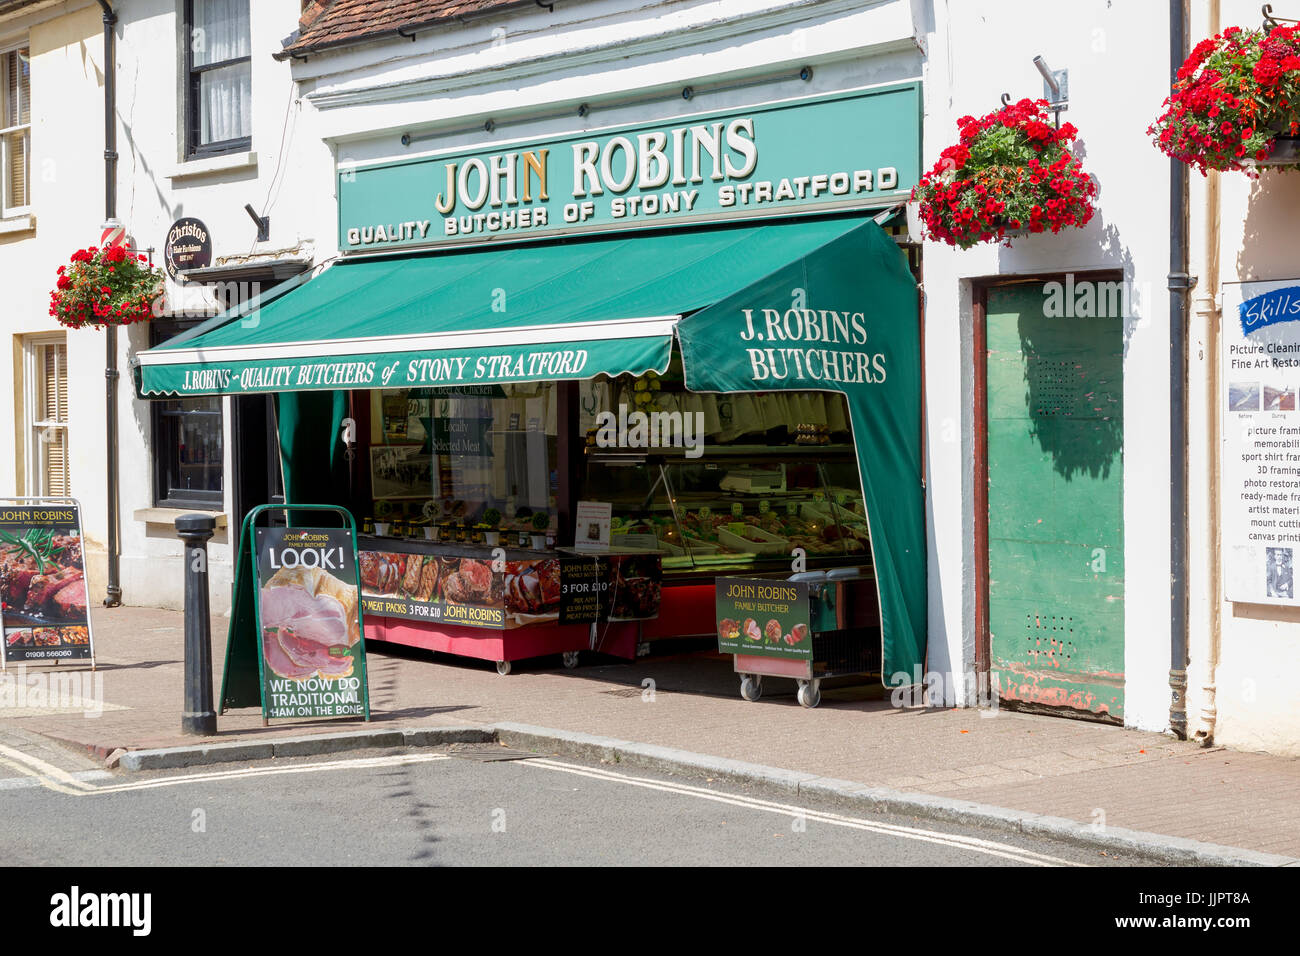 John Robins quality butchers shop front on the High Street, Stony Stratford, Buckinghamshire, uk Stock Photo